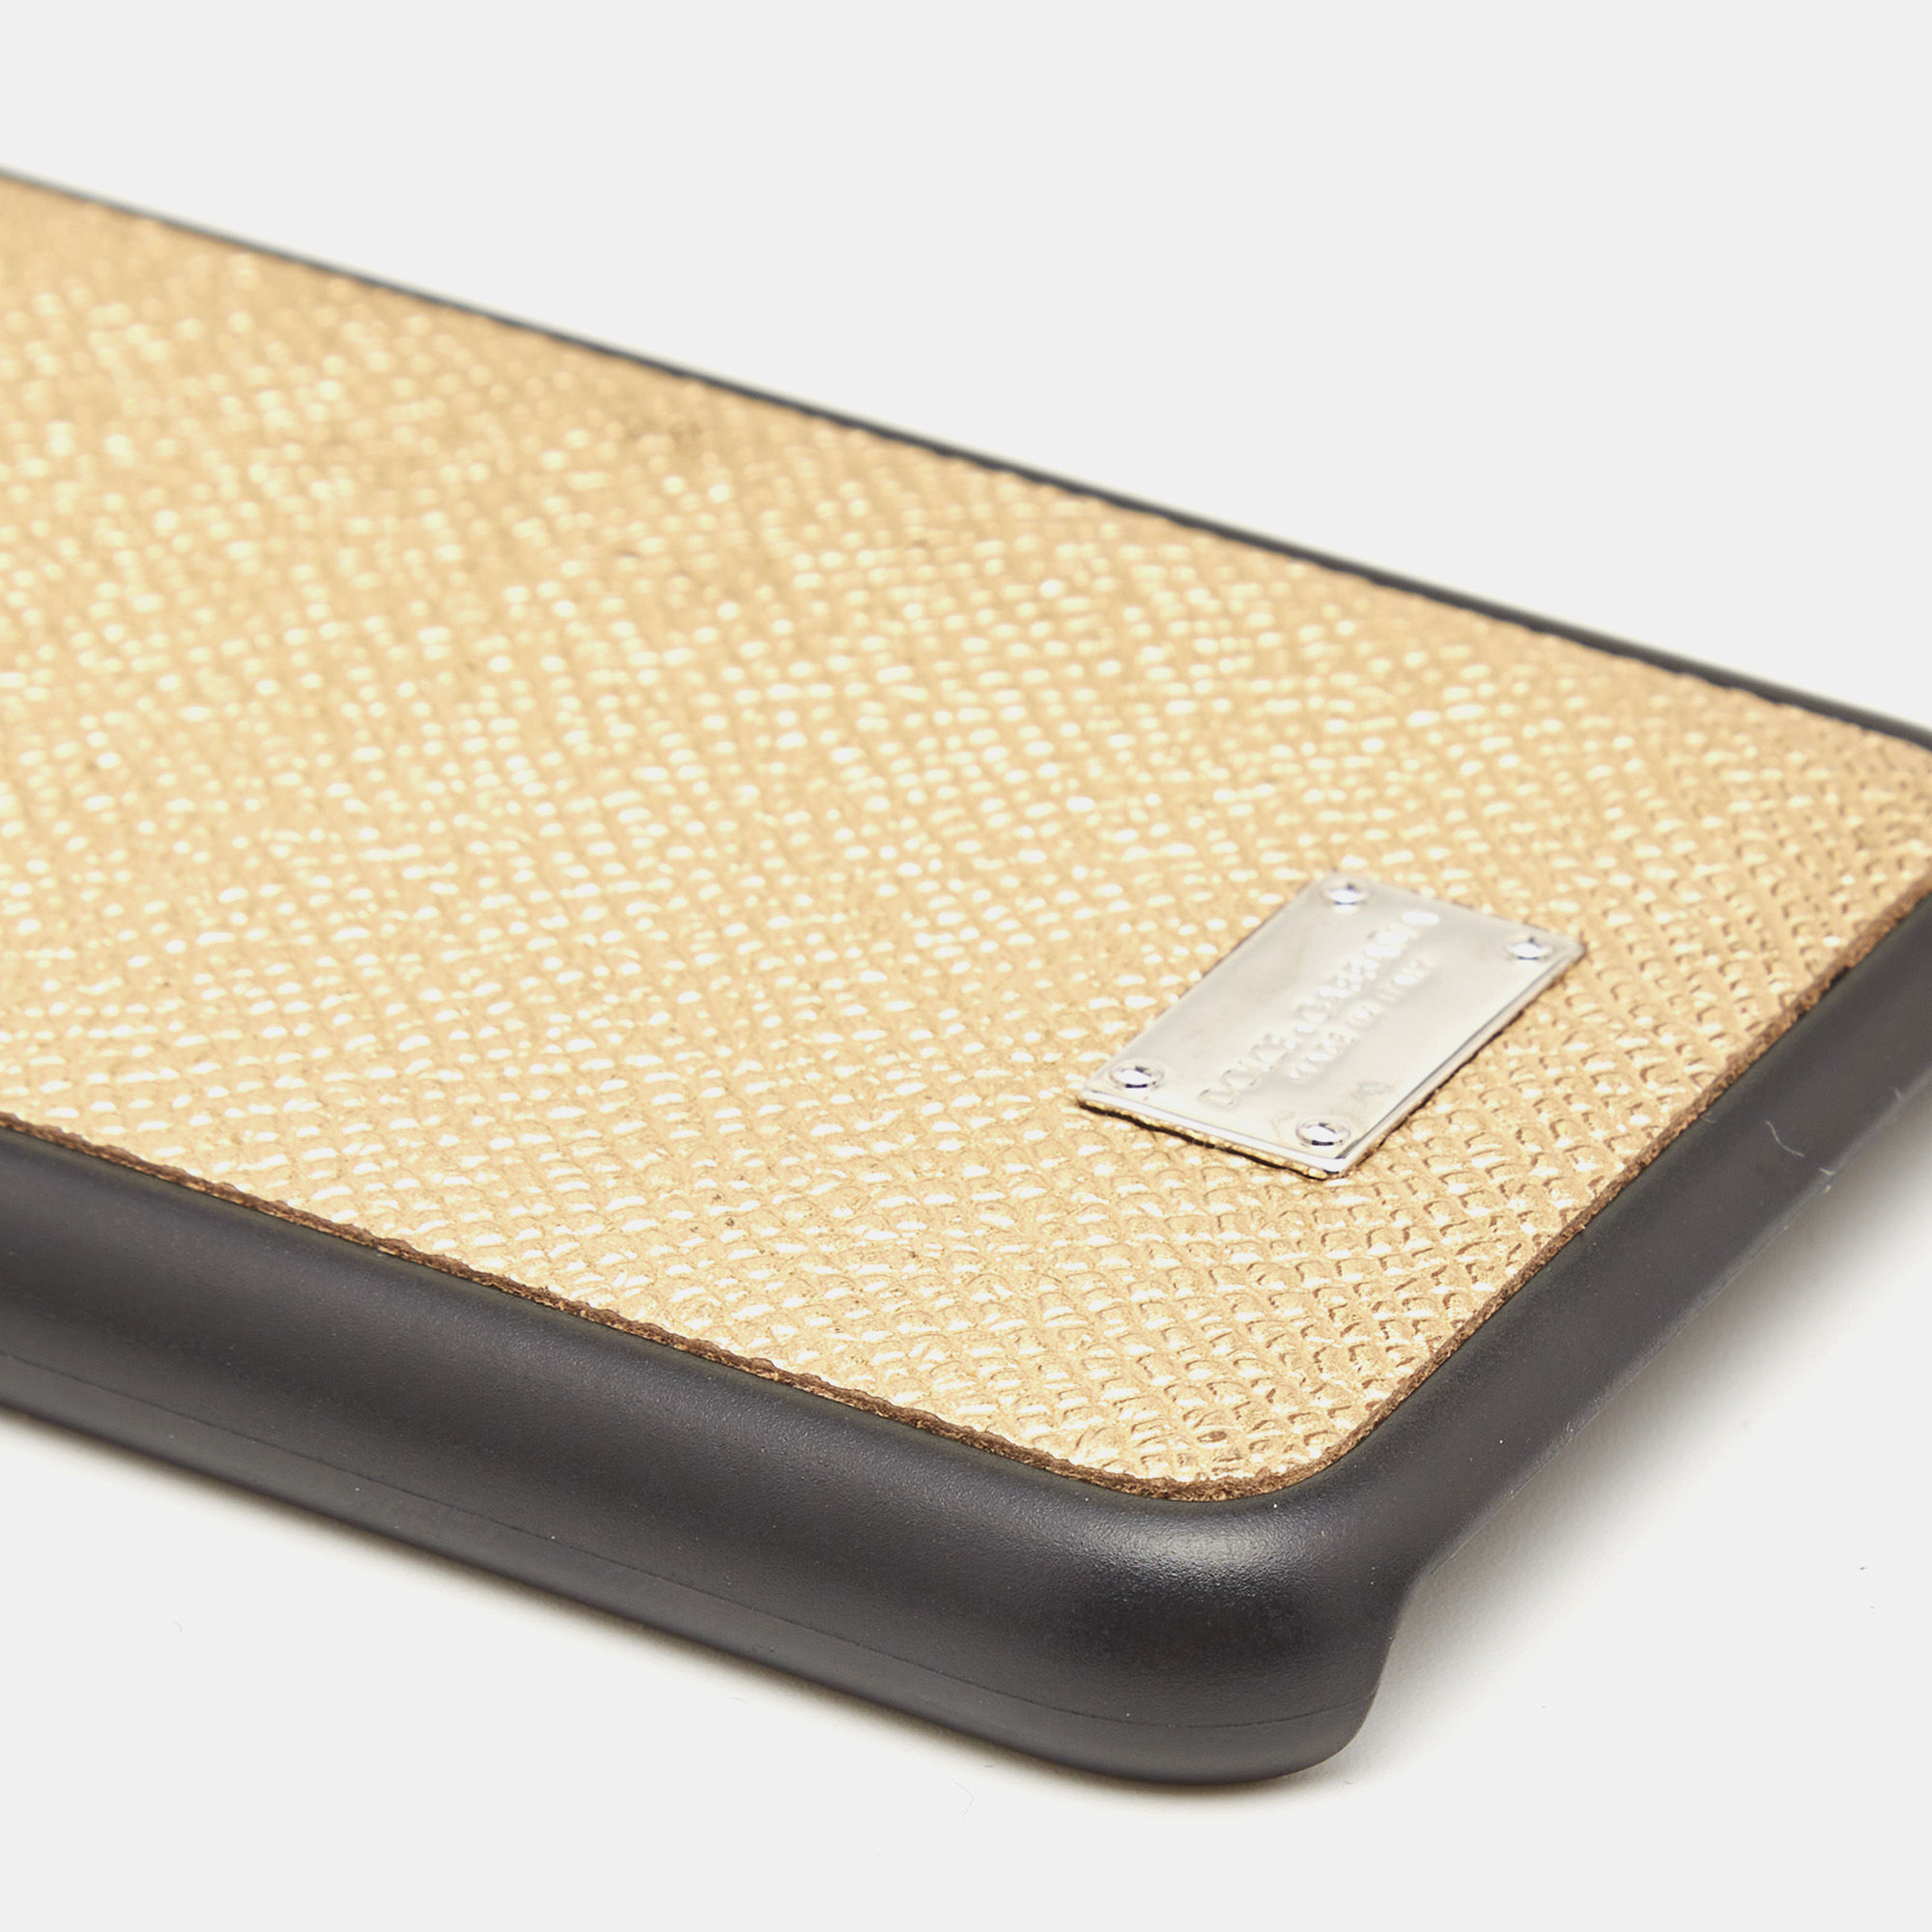 Dolce & Gabbana Gold/Black Leather Phone Case